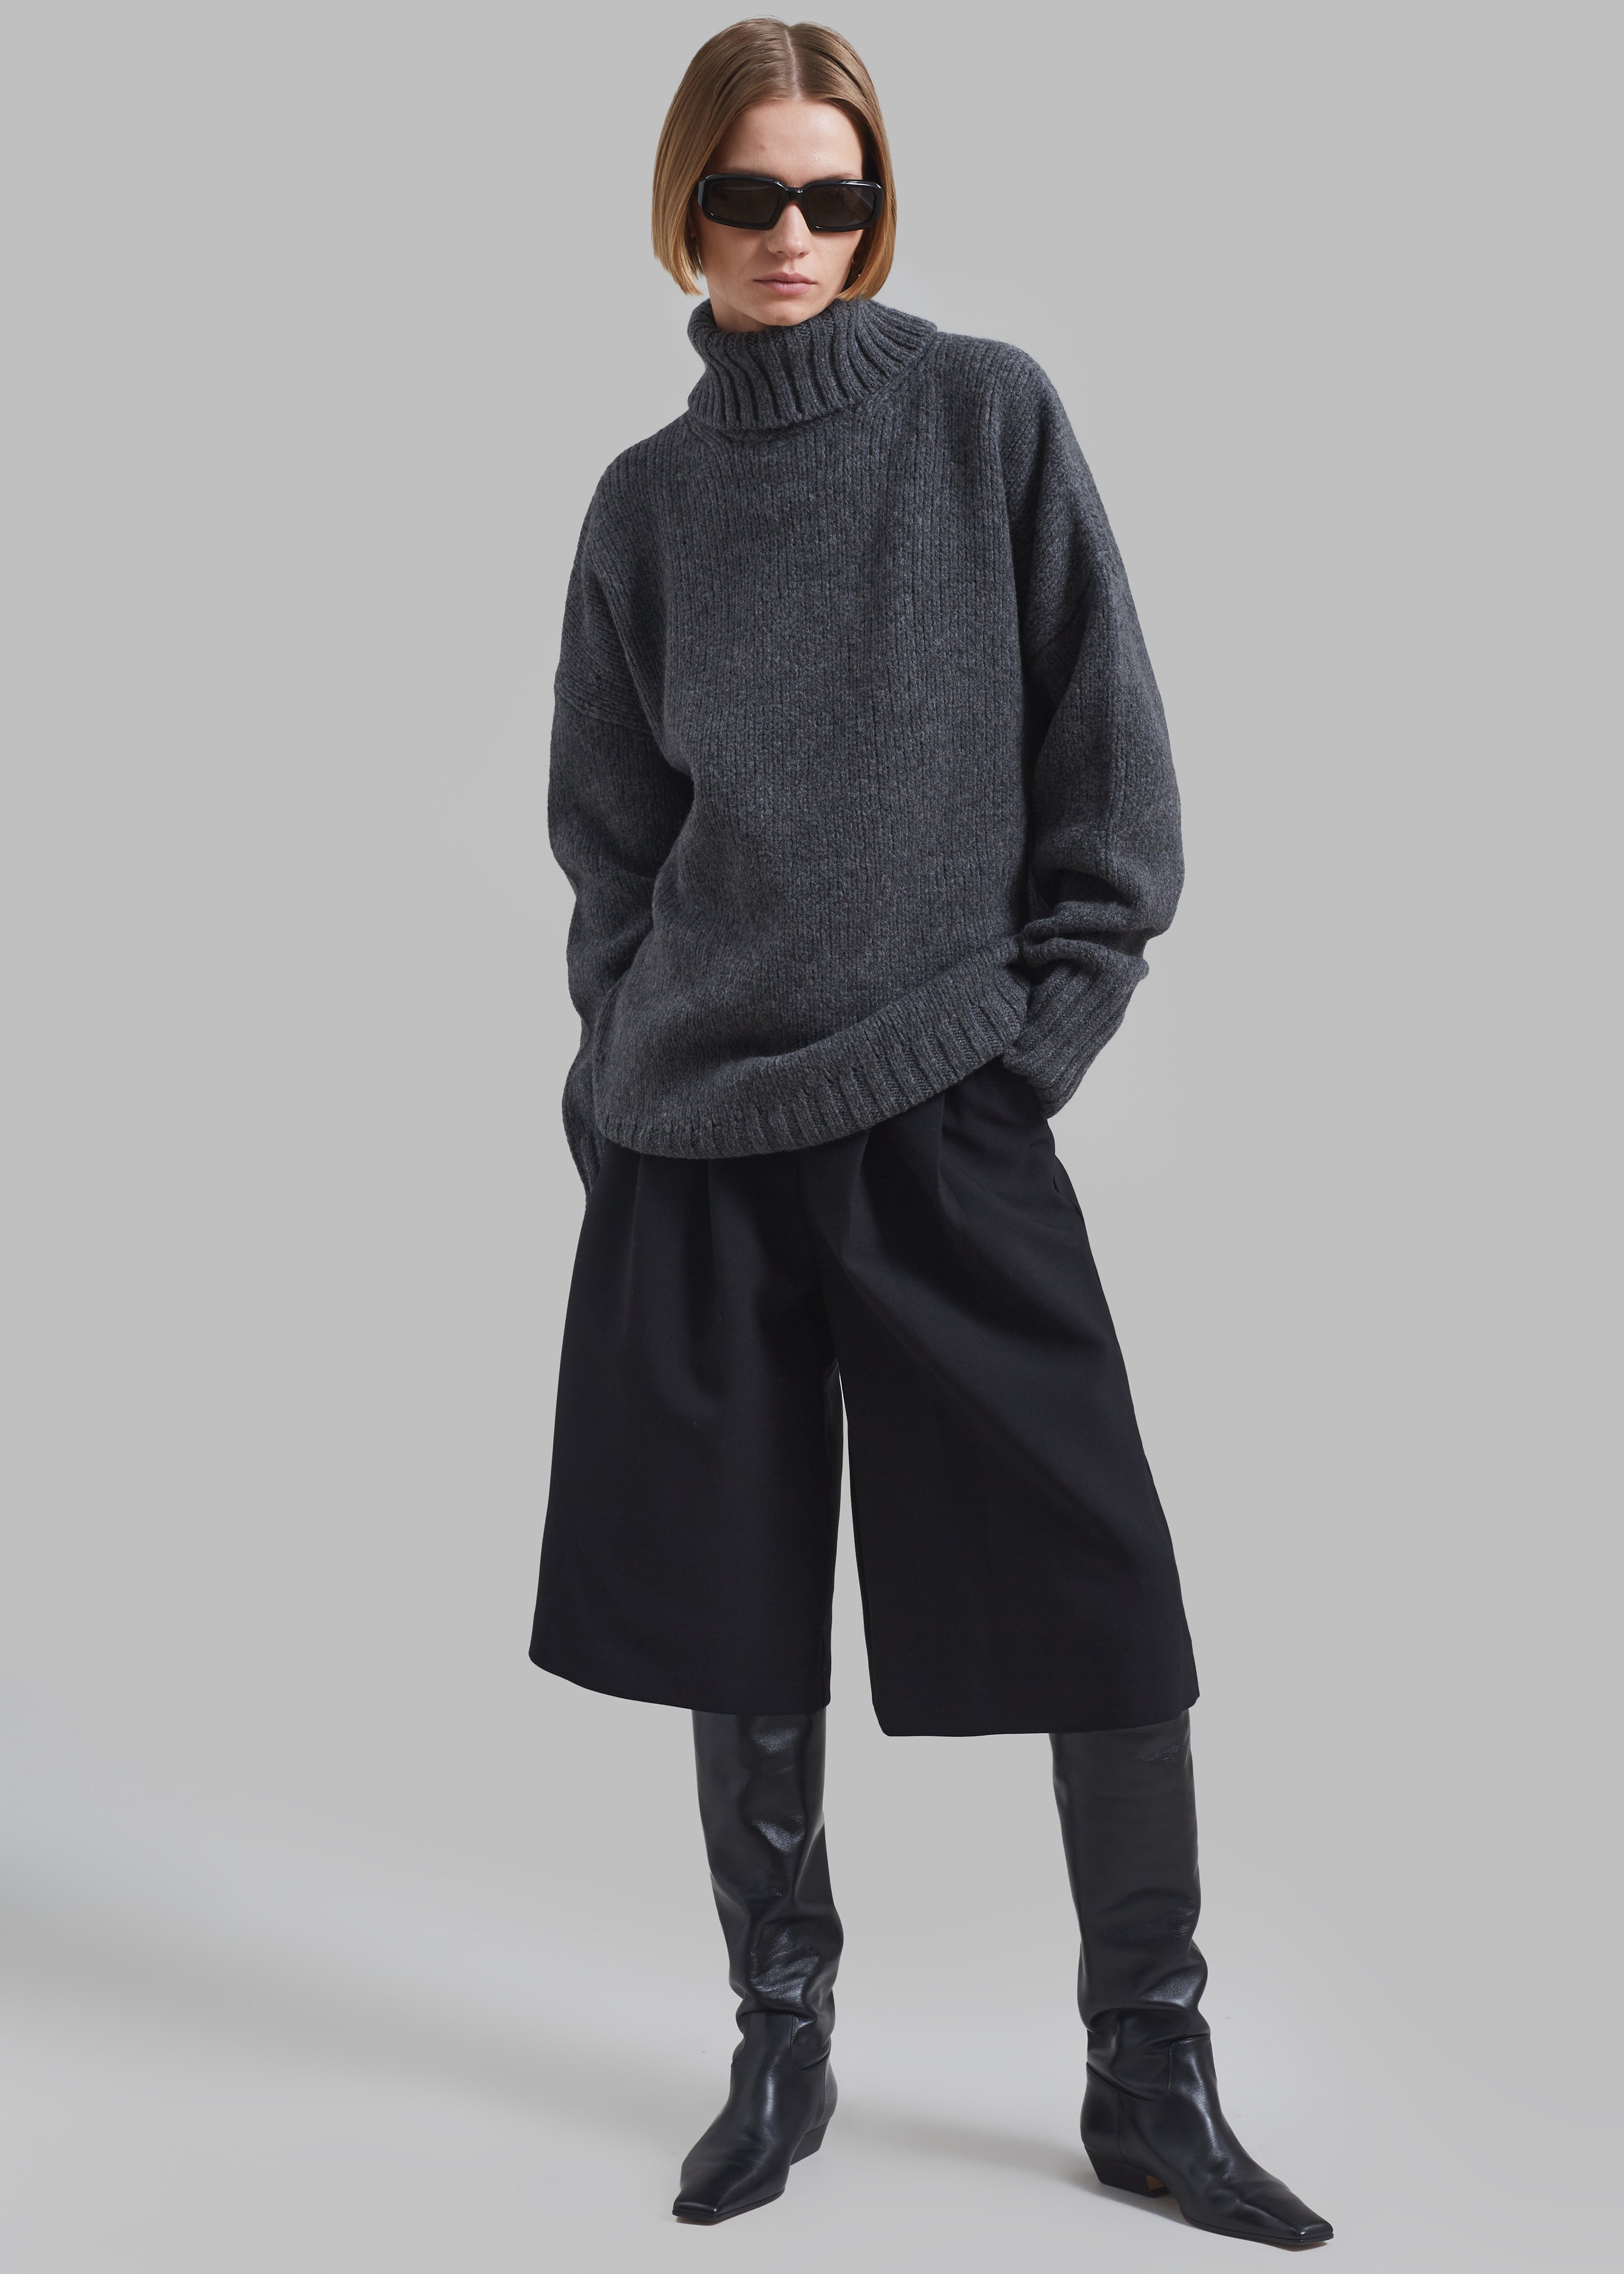 Sportmax Premier Knitted Sweater Dress - Dark Grey - 3